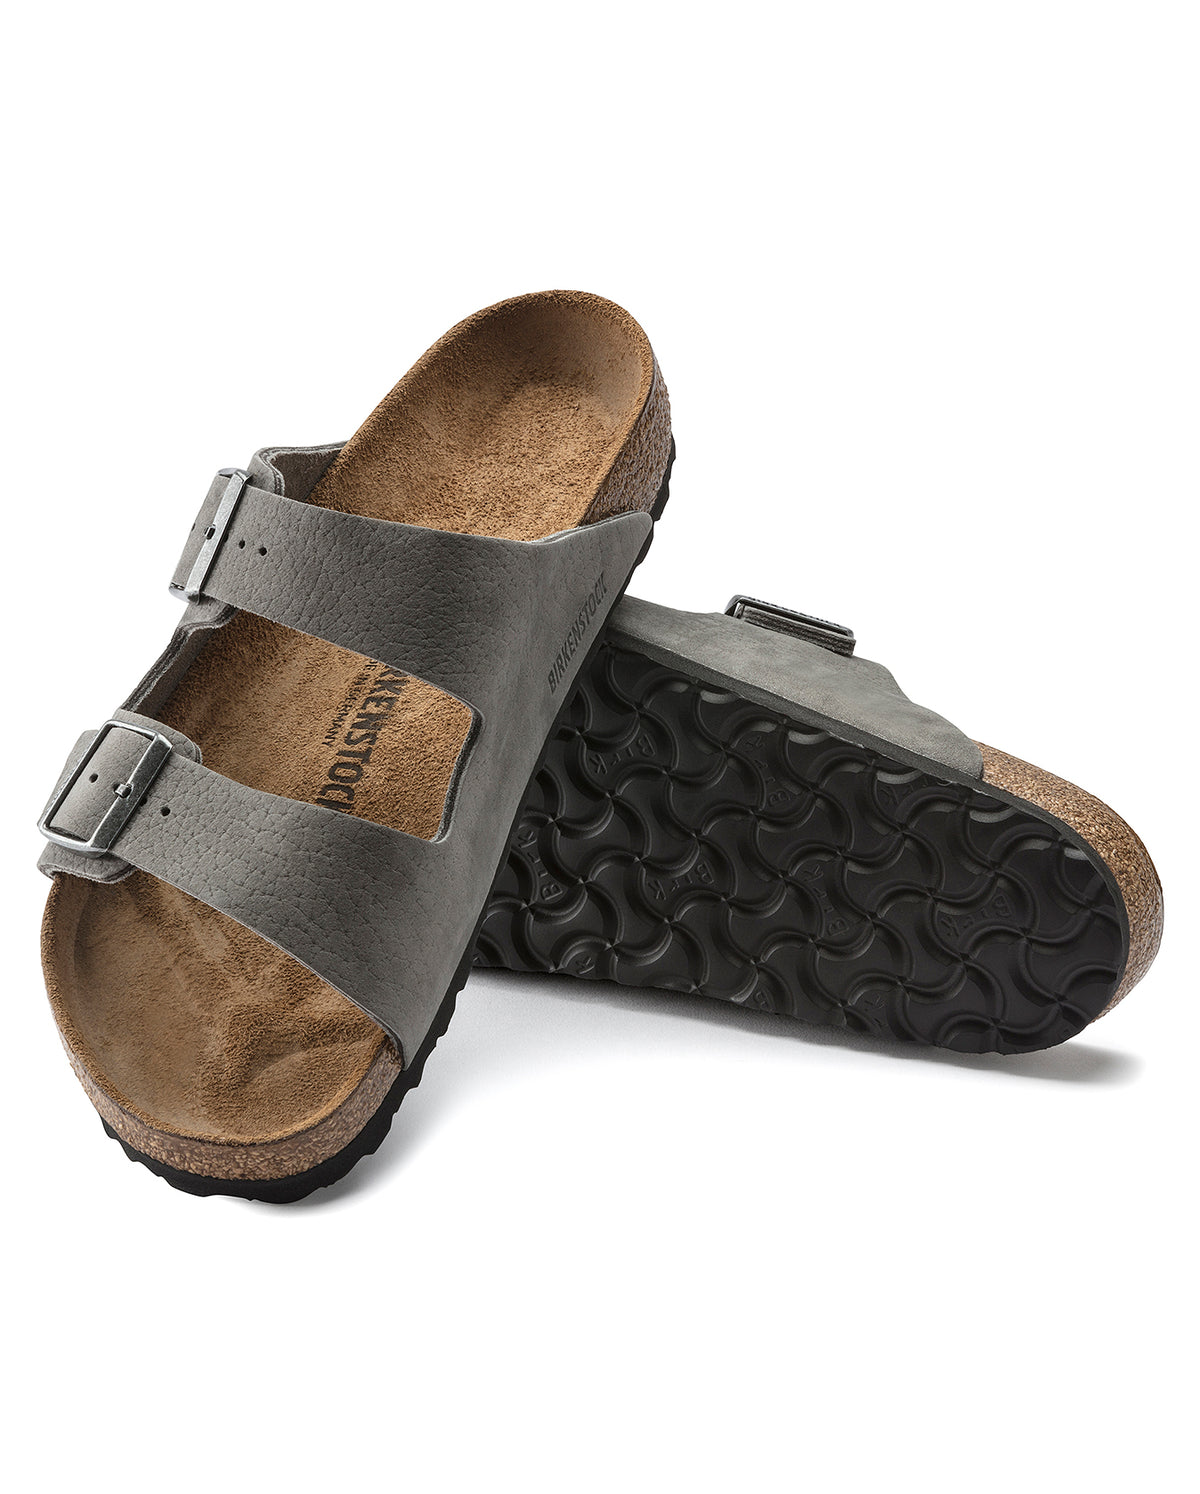 Arizona Men's Nubuck Sandals - Whale Grey